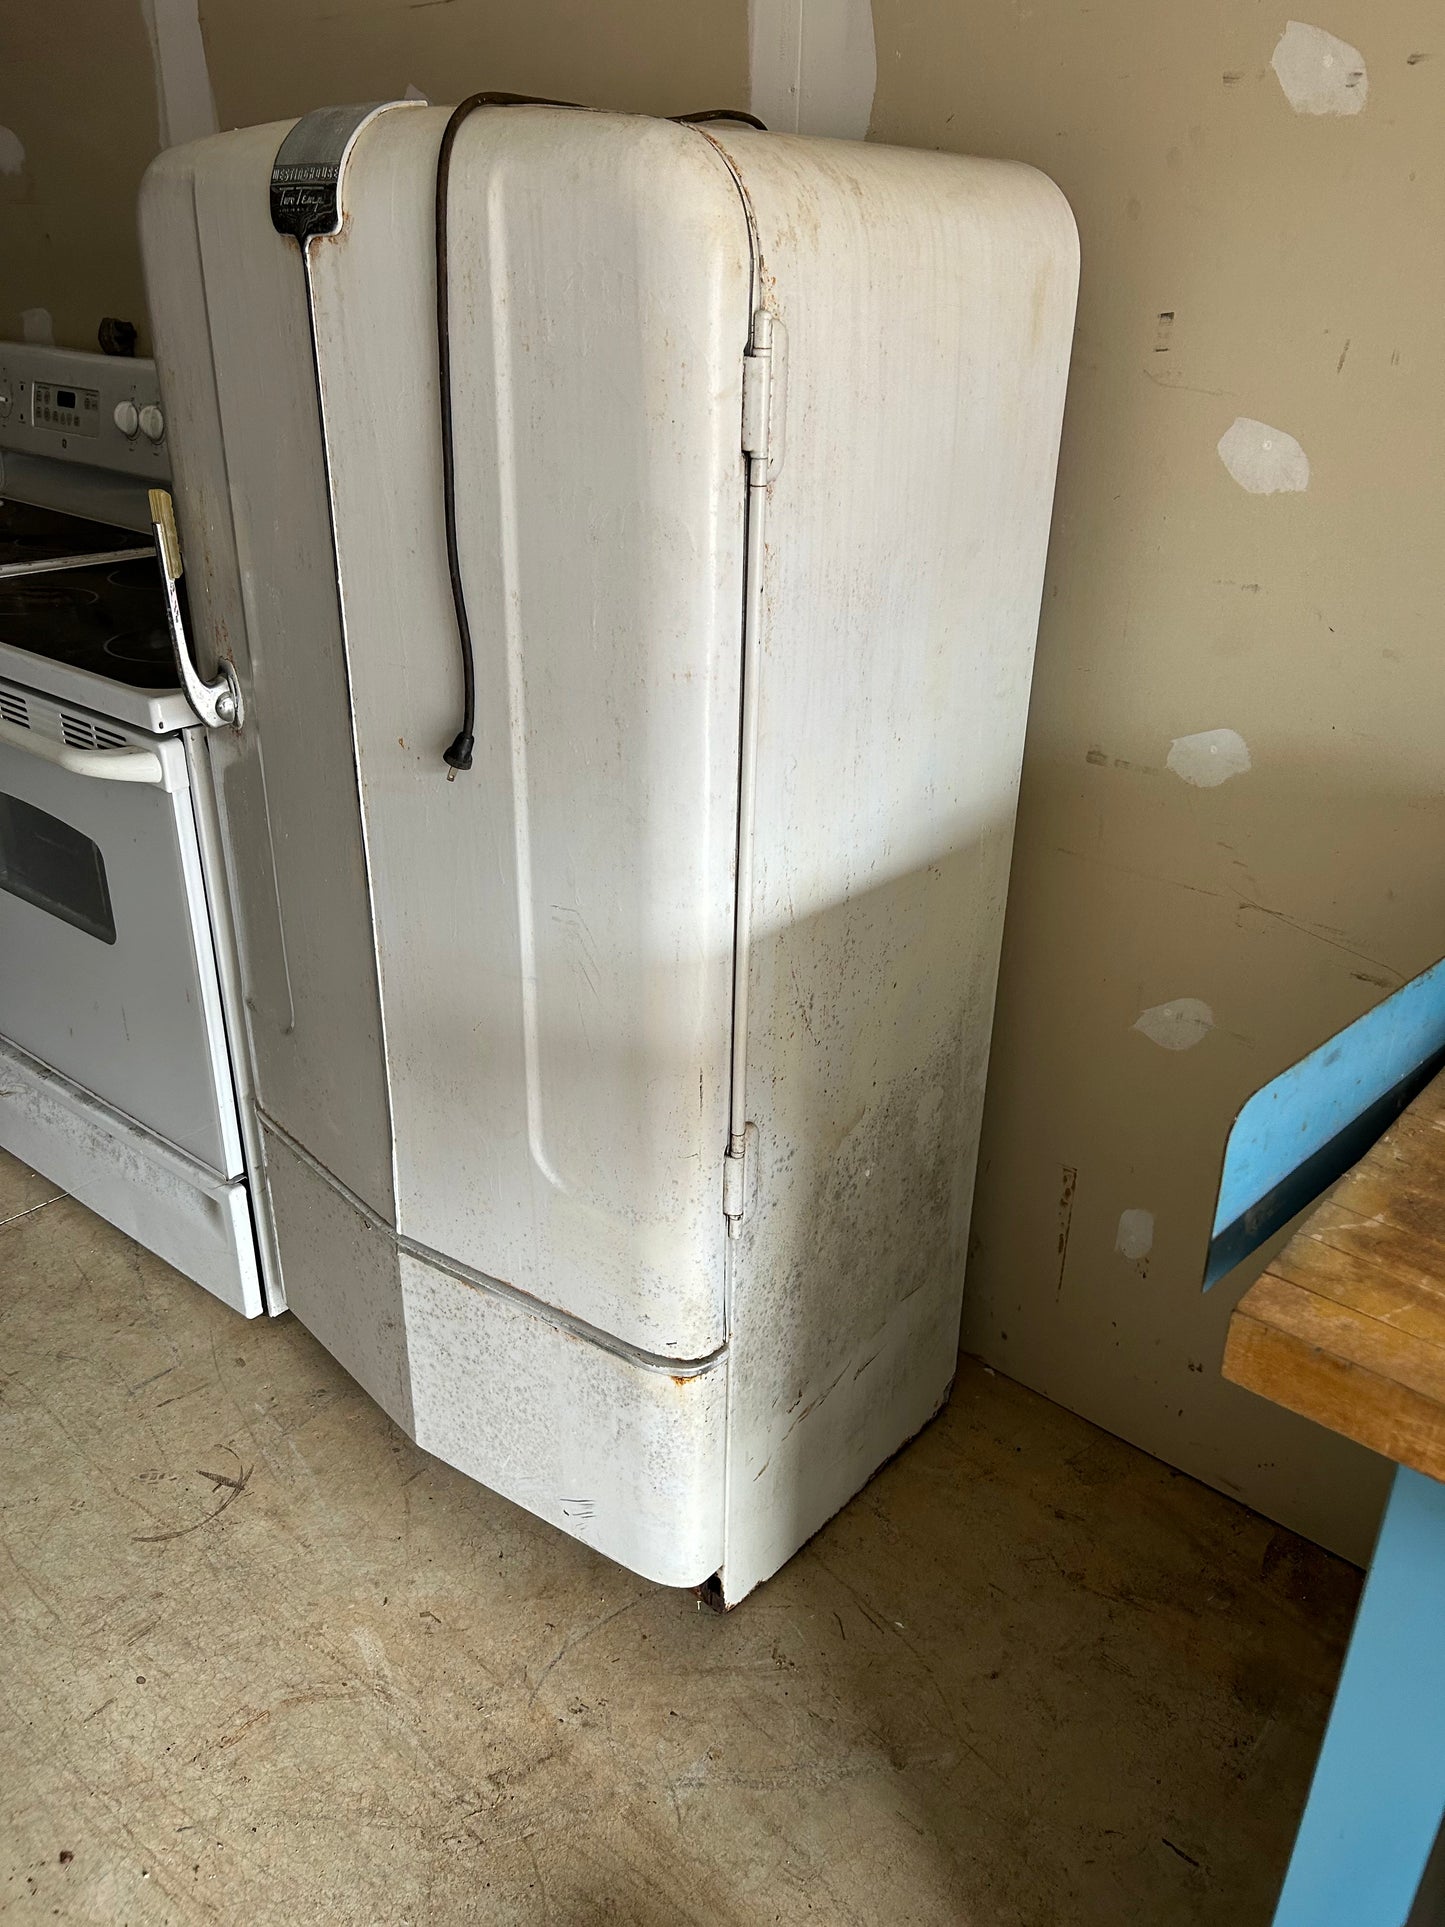 Vintage Refrigerator Freezer Westinghouse 1940-50's Gets Power